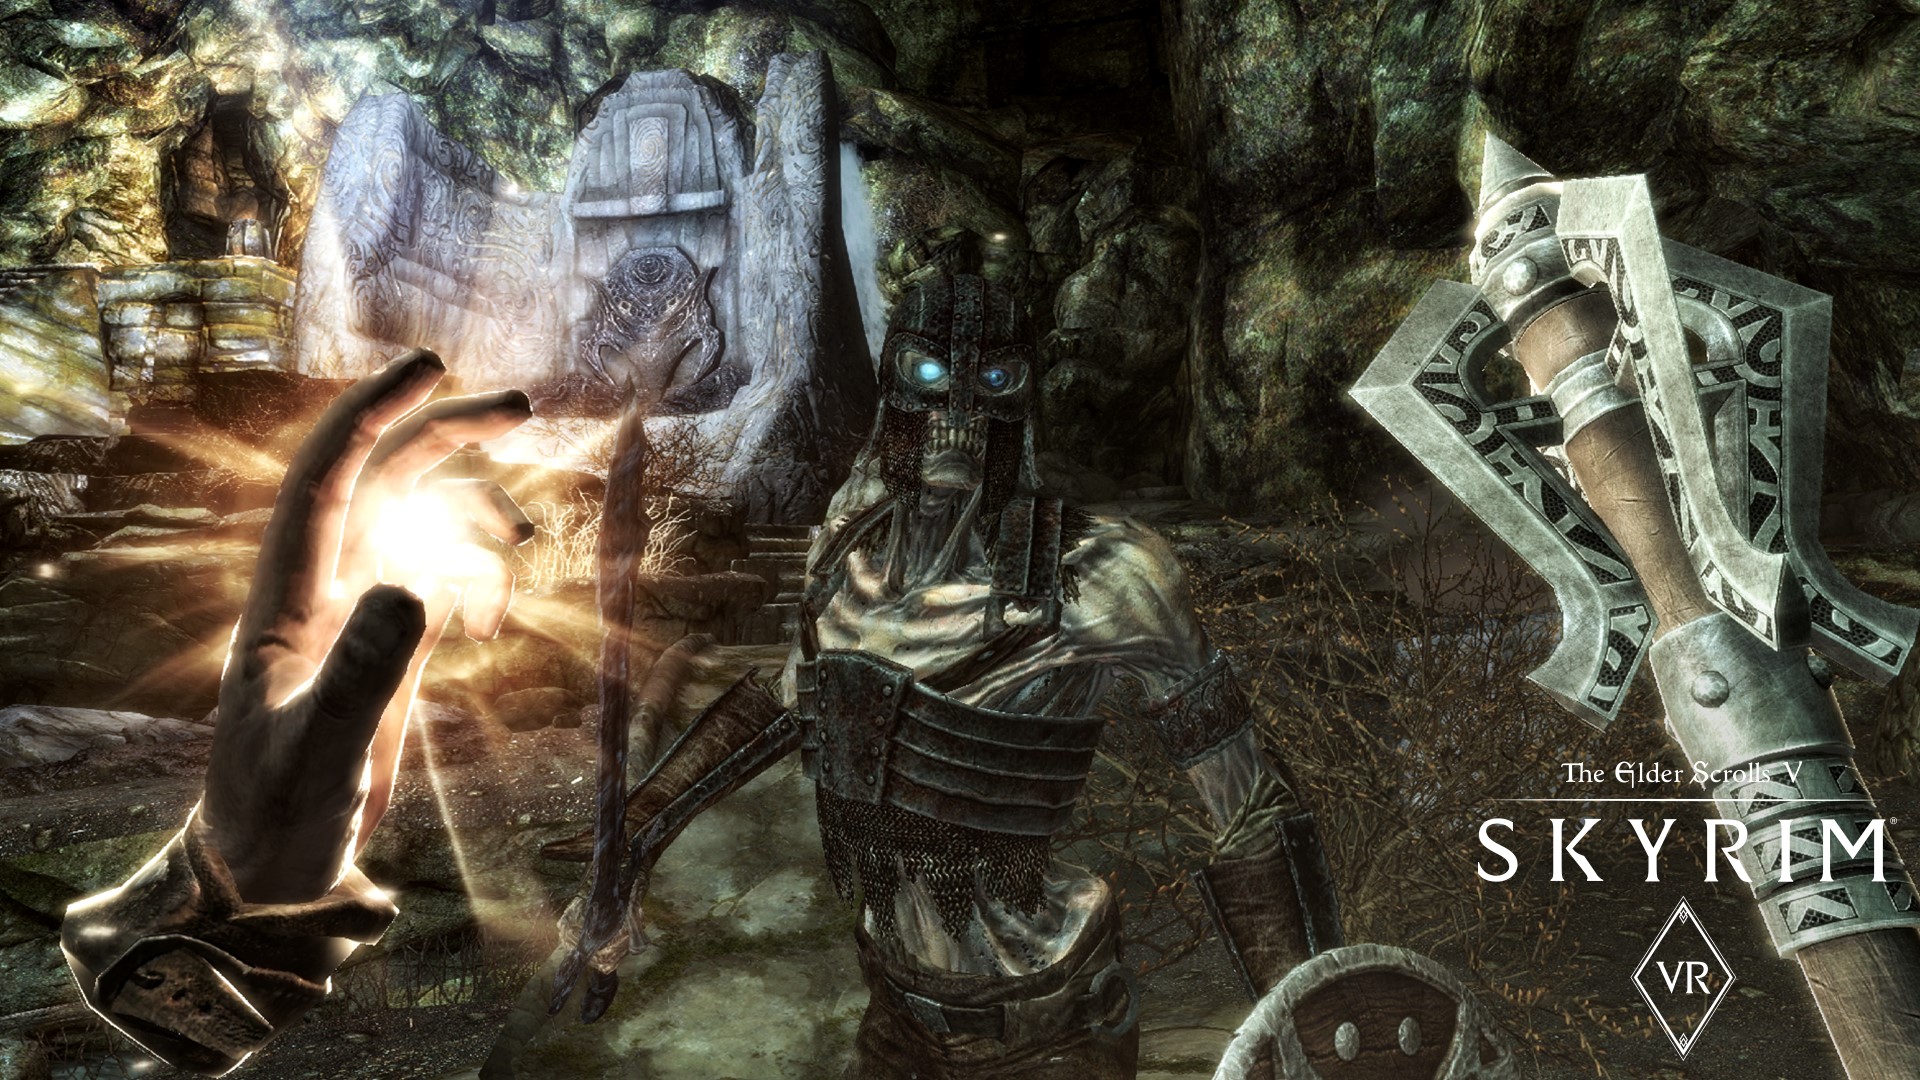 The Elder Scrolls V: Skyrim VR (Steam key) @ RU